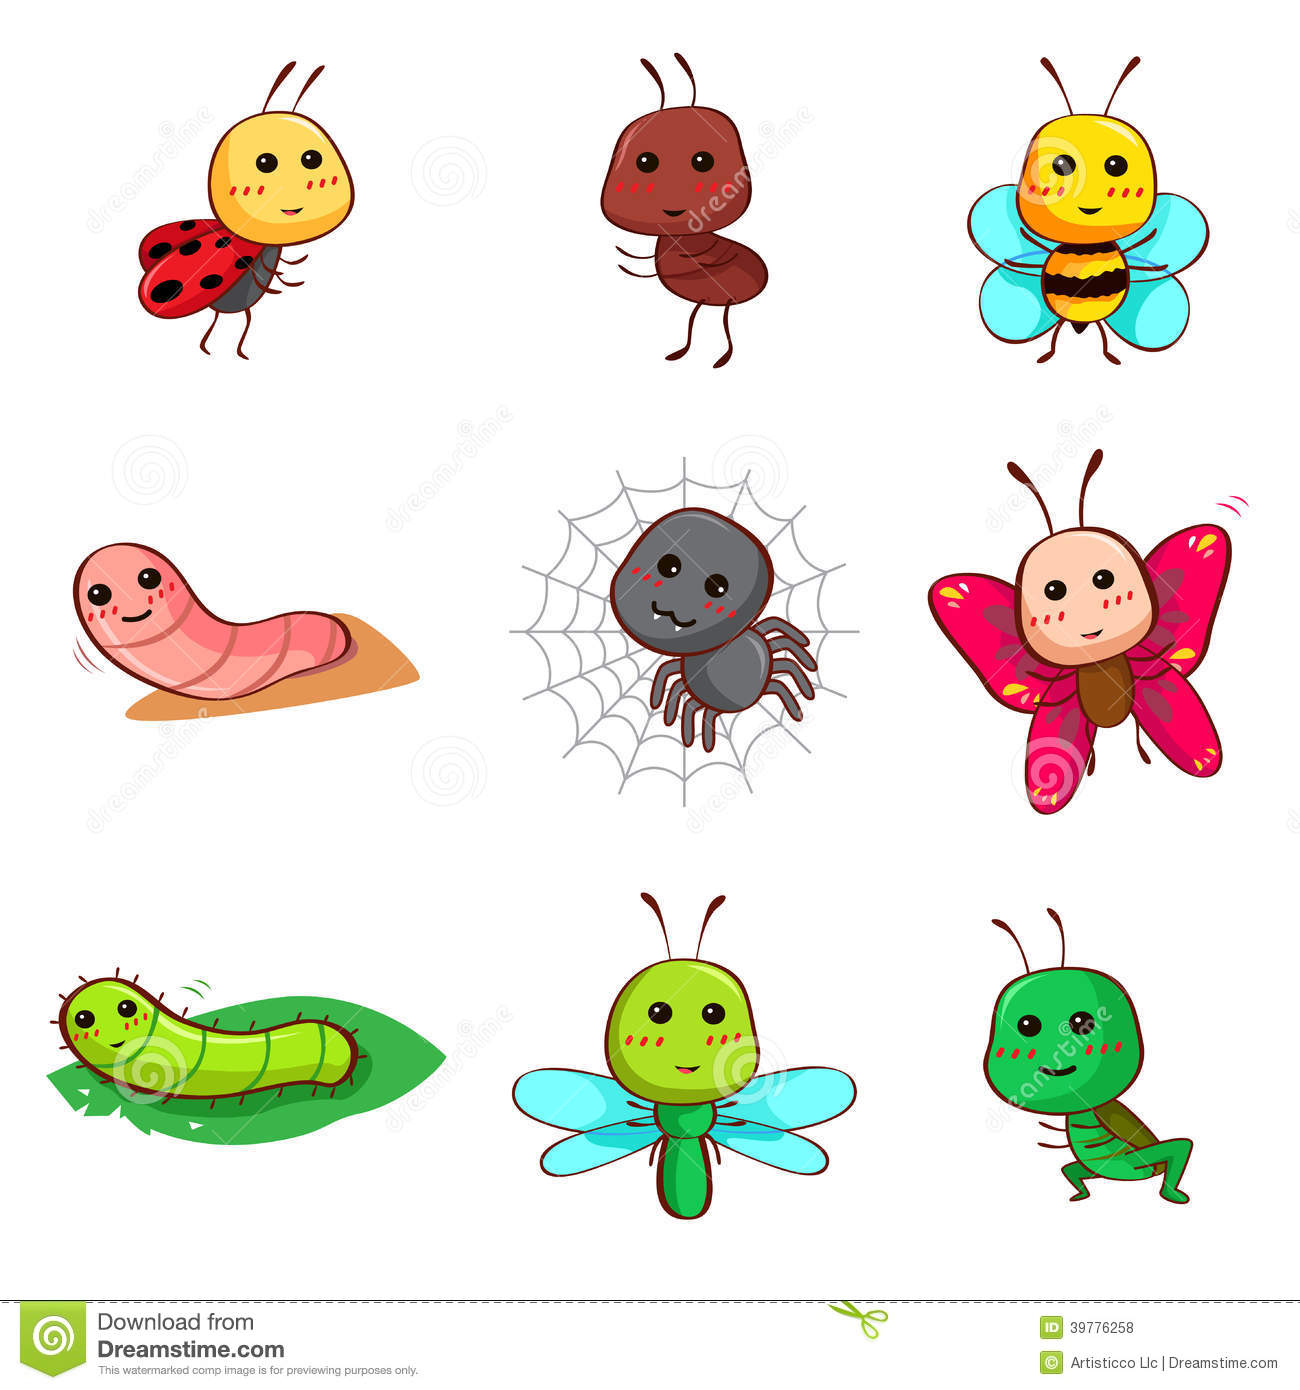 Cute Cartoon Bugs Group with 52+ items.